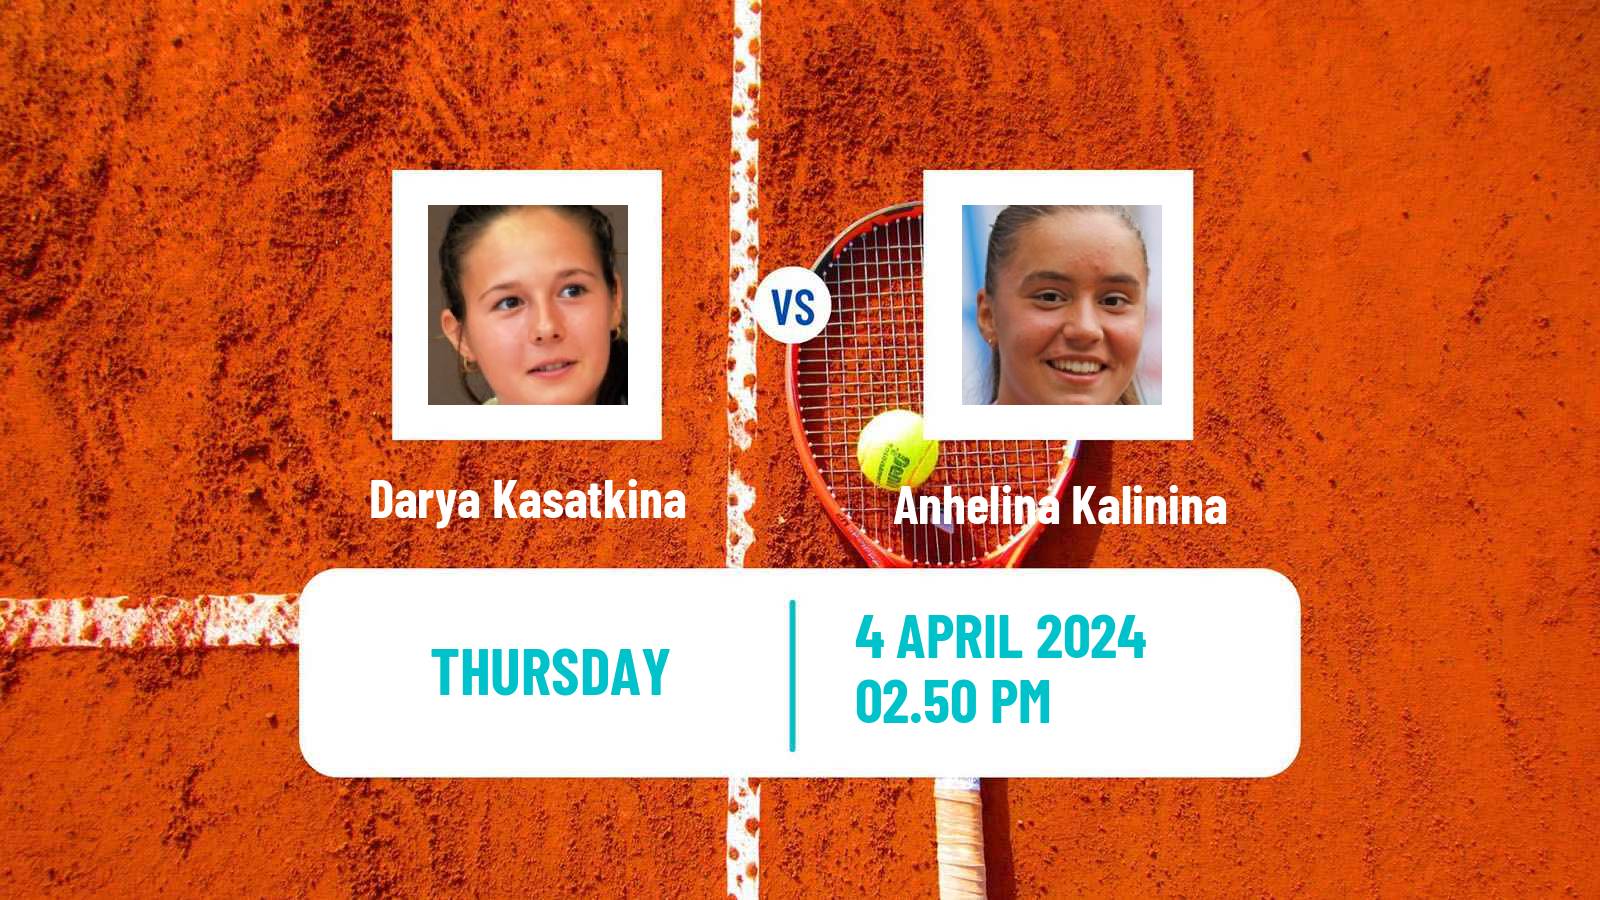 Tennis WTA Charleston Darya Kasatkina - Anhelina Kalinina